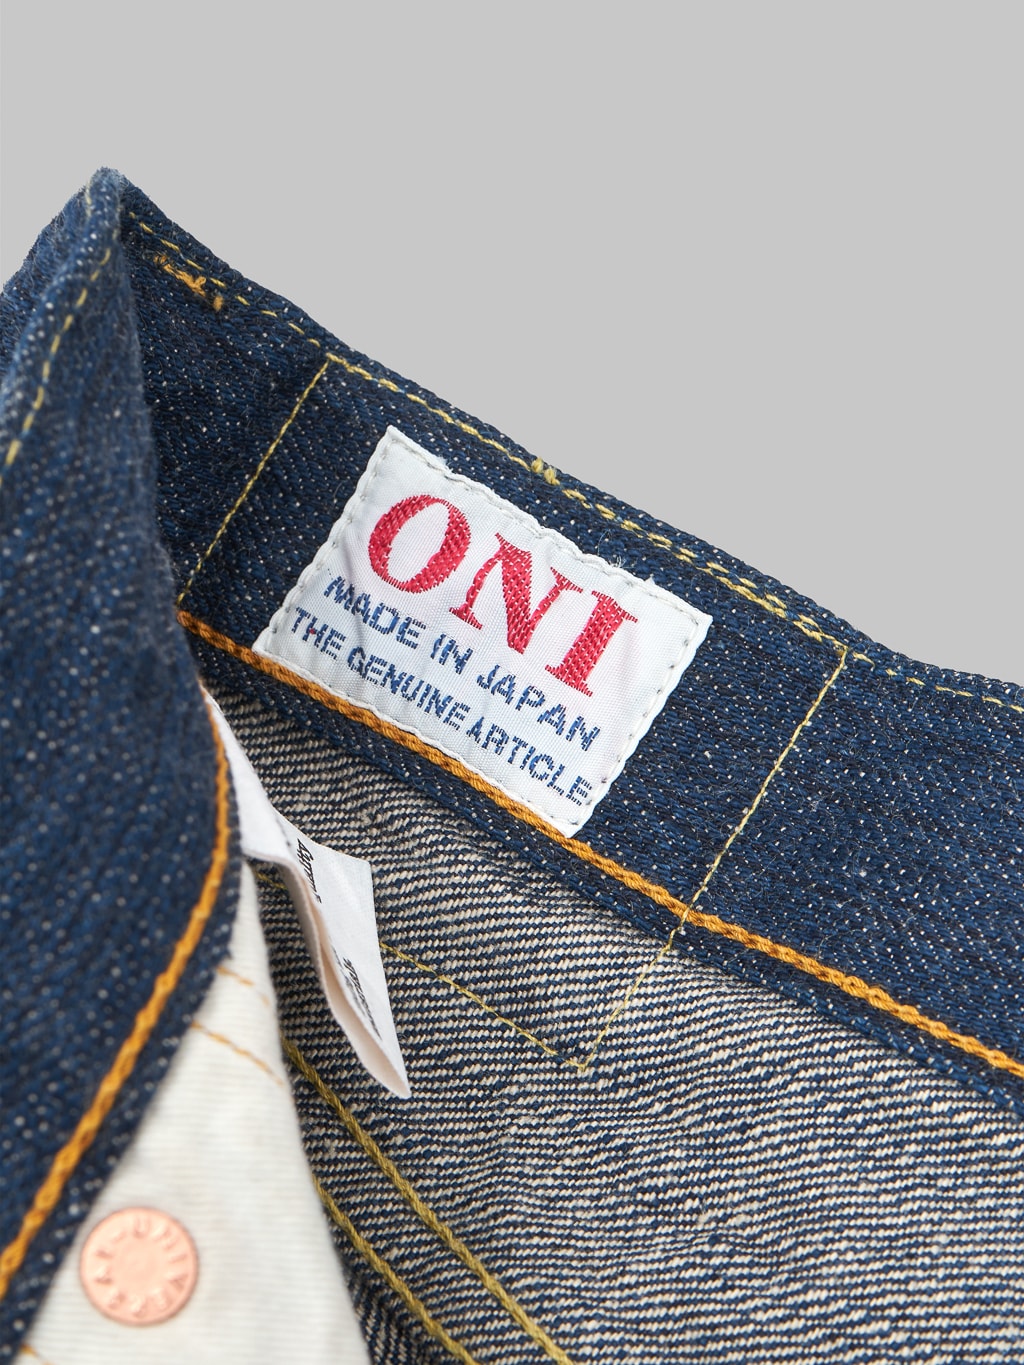 Oni denim kiwami indigo regular selvedge jeans brand logo tag